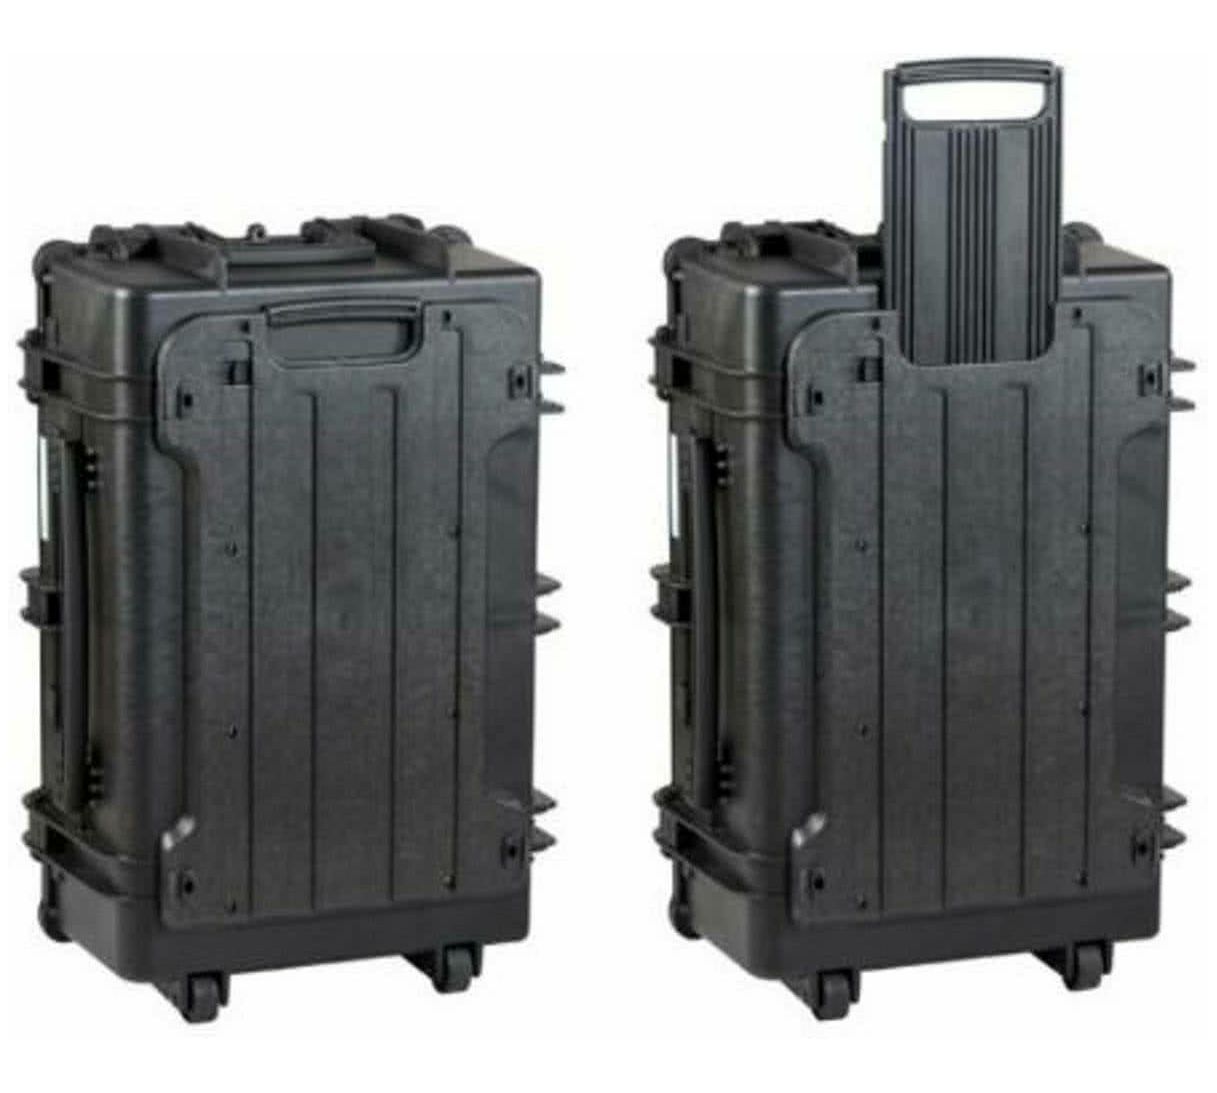 Explorer Cases 7630 Orange 860x560x355mm kufer za foto opremu kofer Camera Case